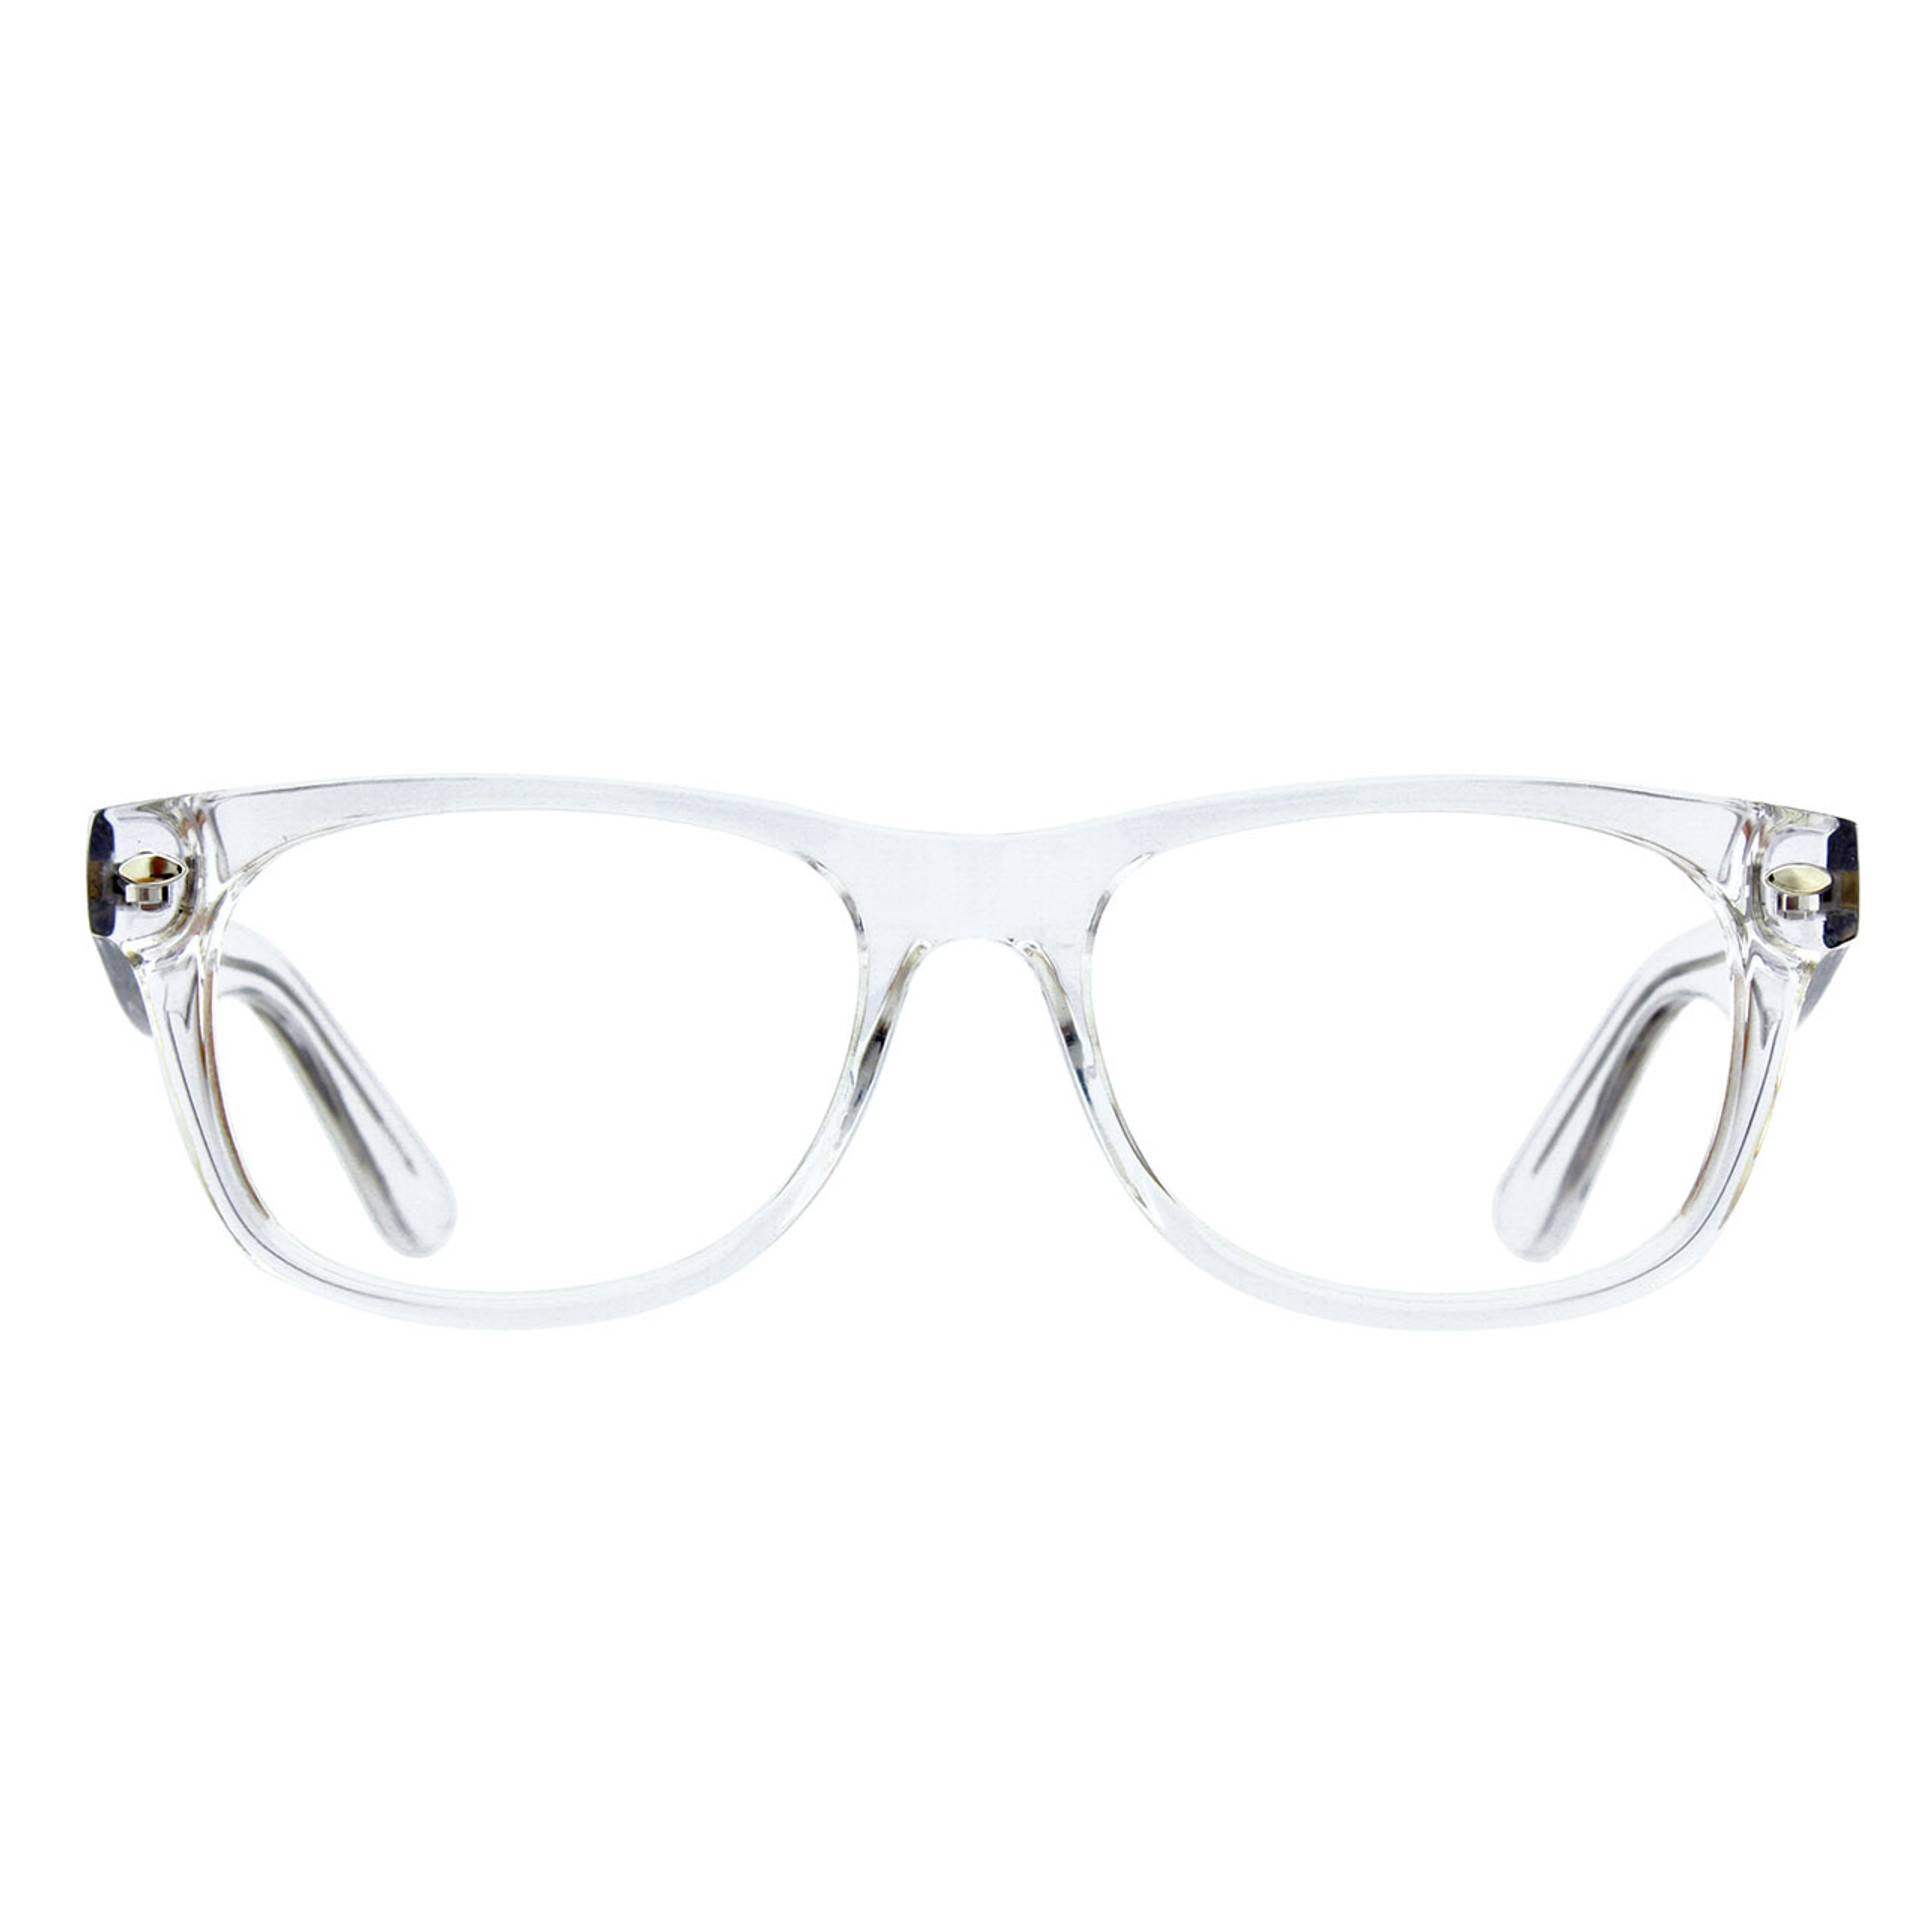 Geek Eyewear® Rx Eyeglasses Style Rad 09 Sunglasses Celebrities Inspired Ready To Wear Fashion 